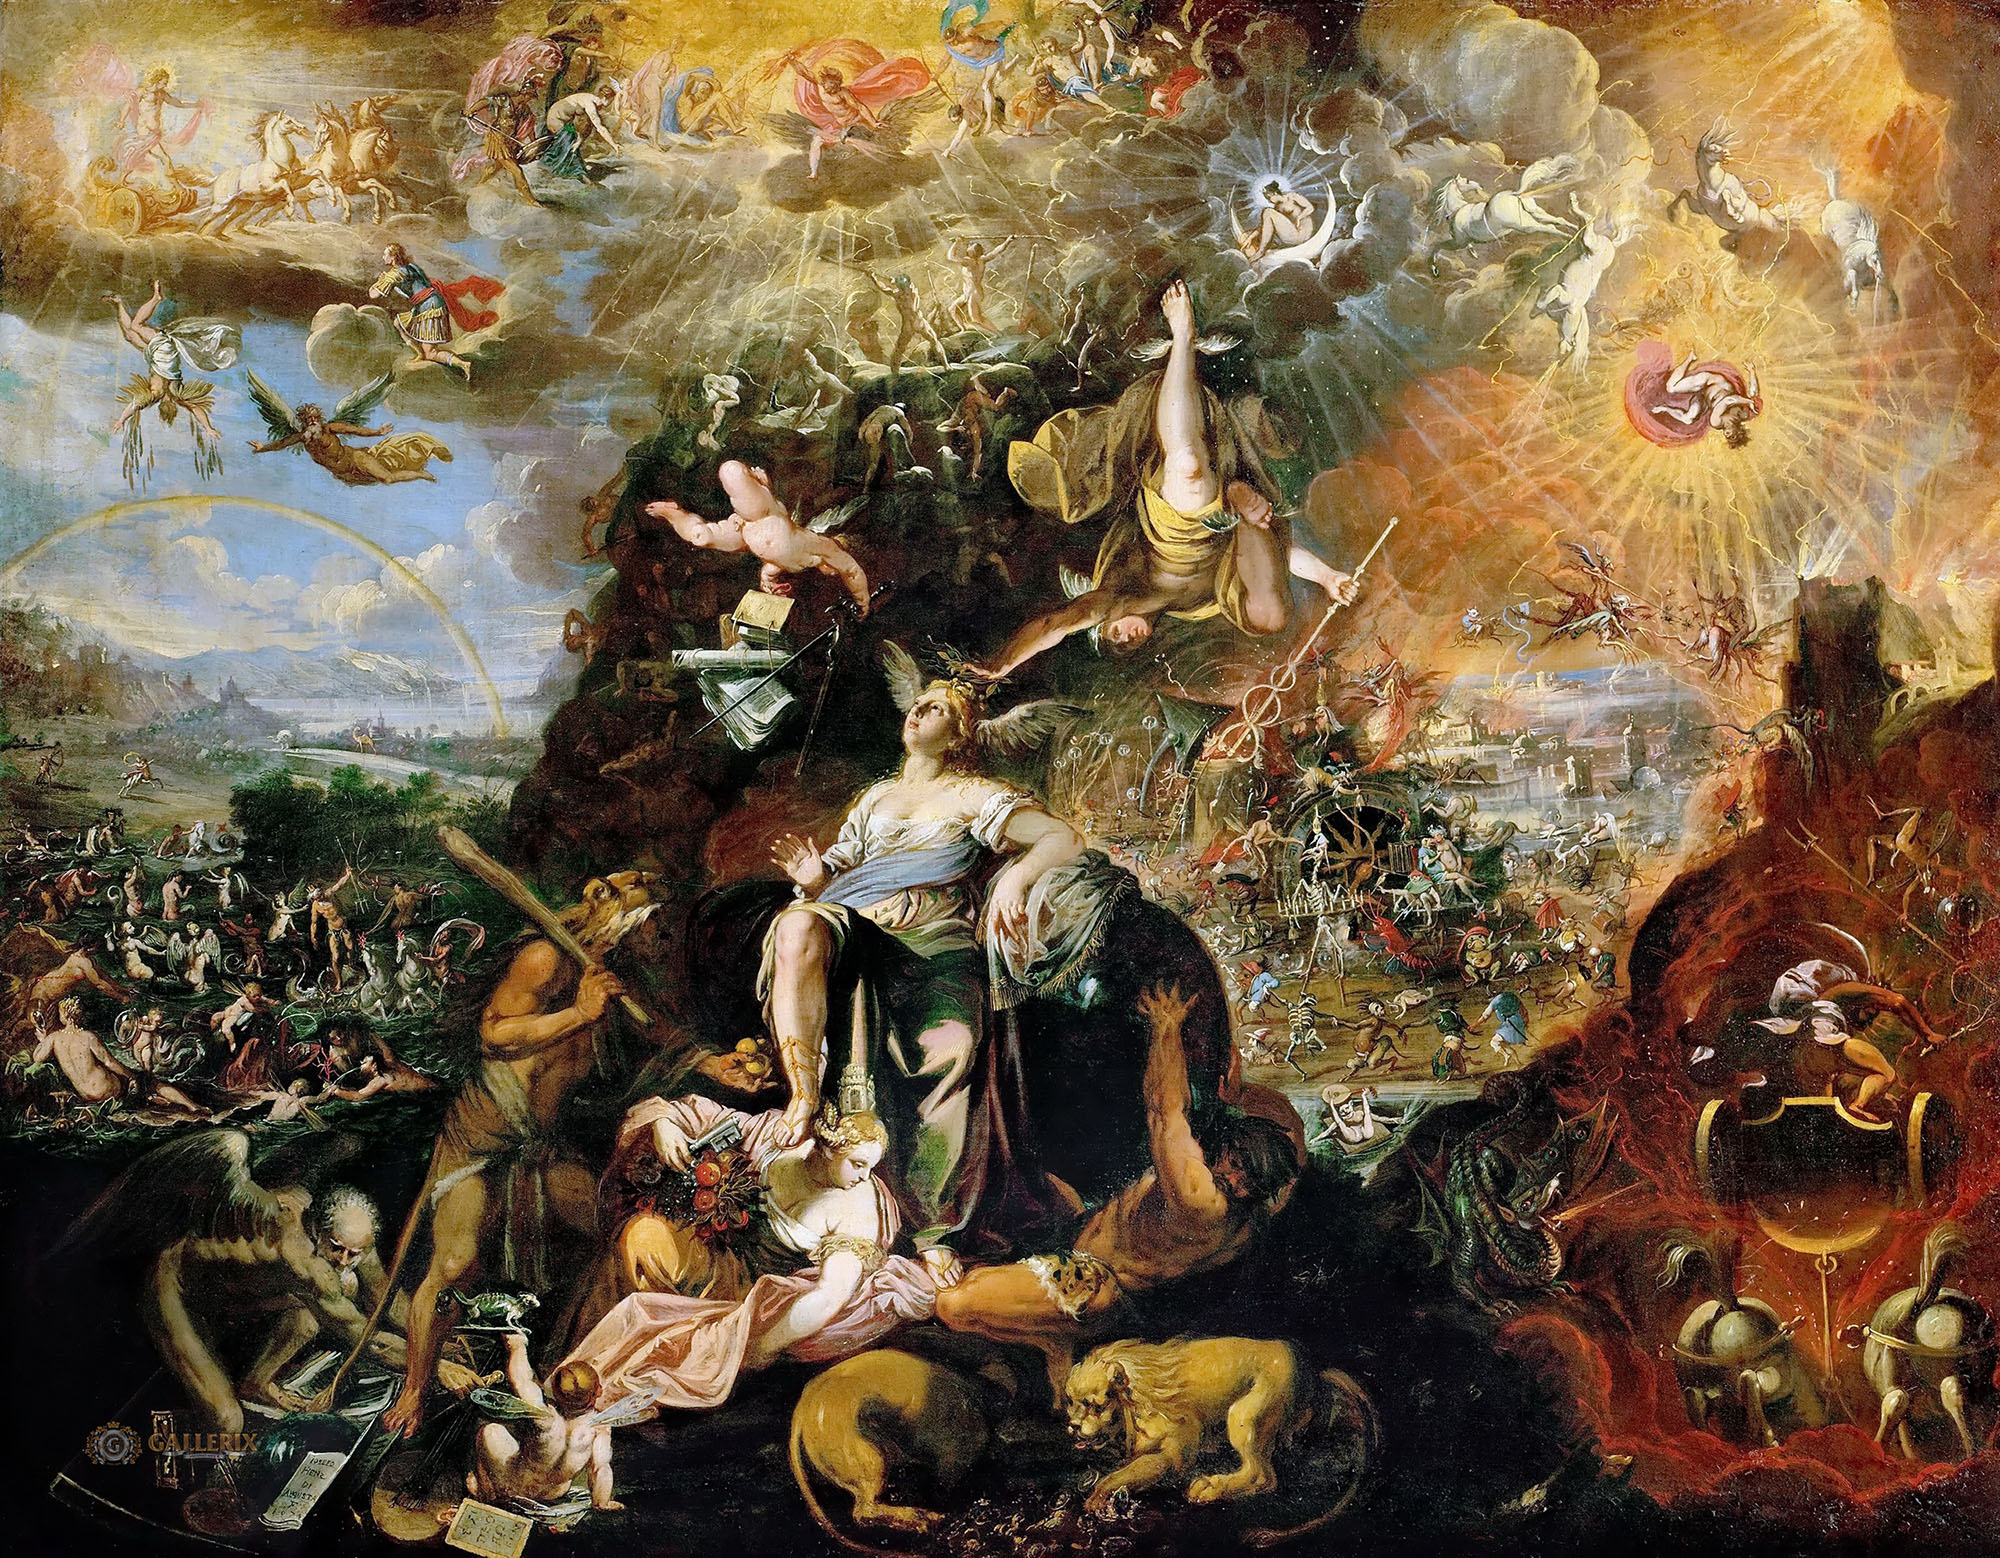 Йозеф Хайнц II. "Апокалипсис". 1674. Музей истории искусств, Вена.